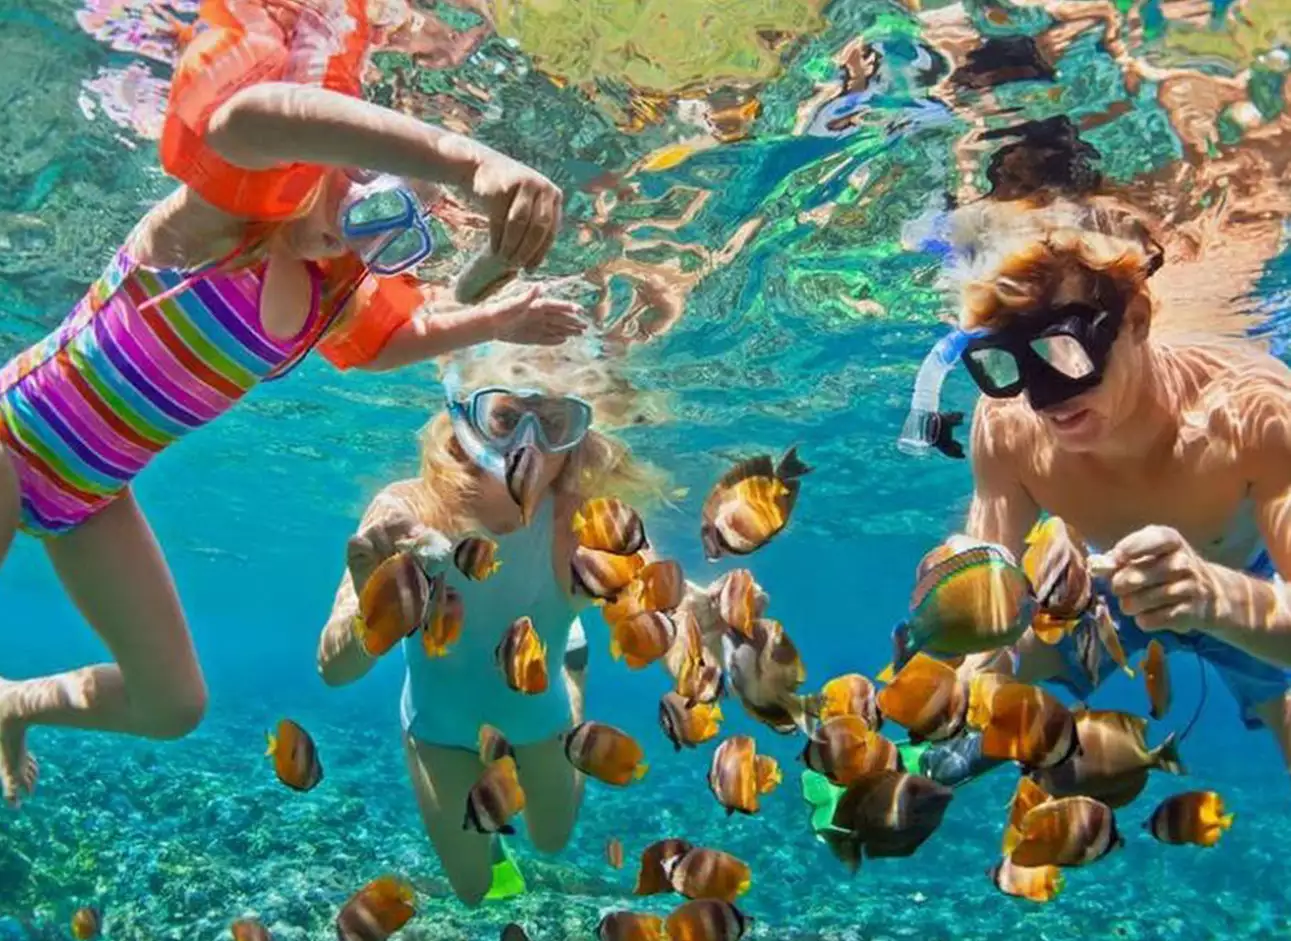 Snorkeling - Explore vibrant marine life underwater